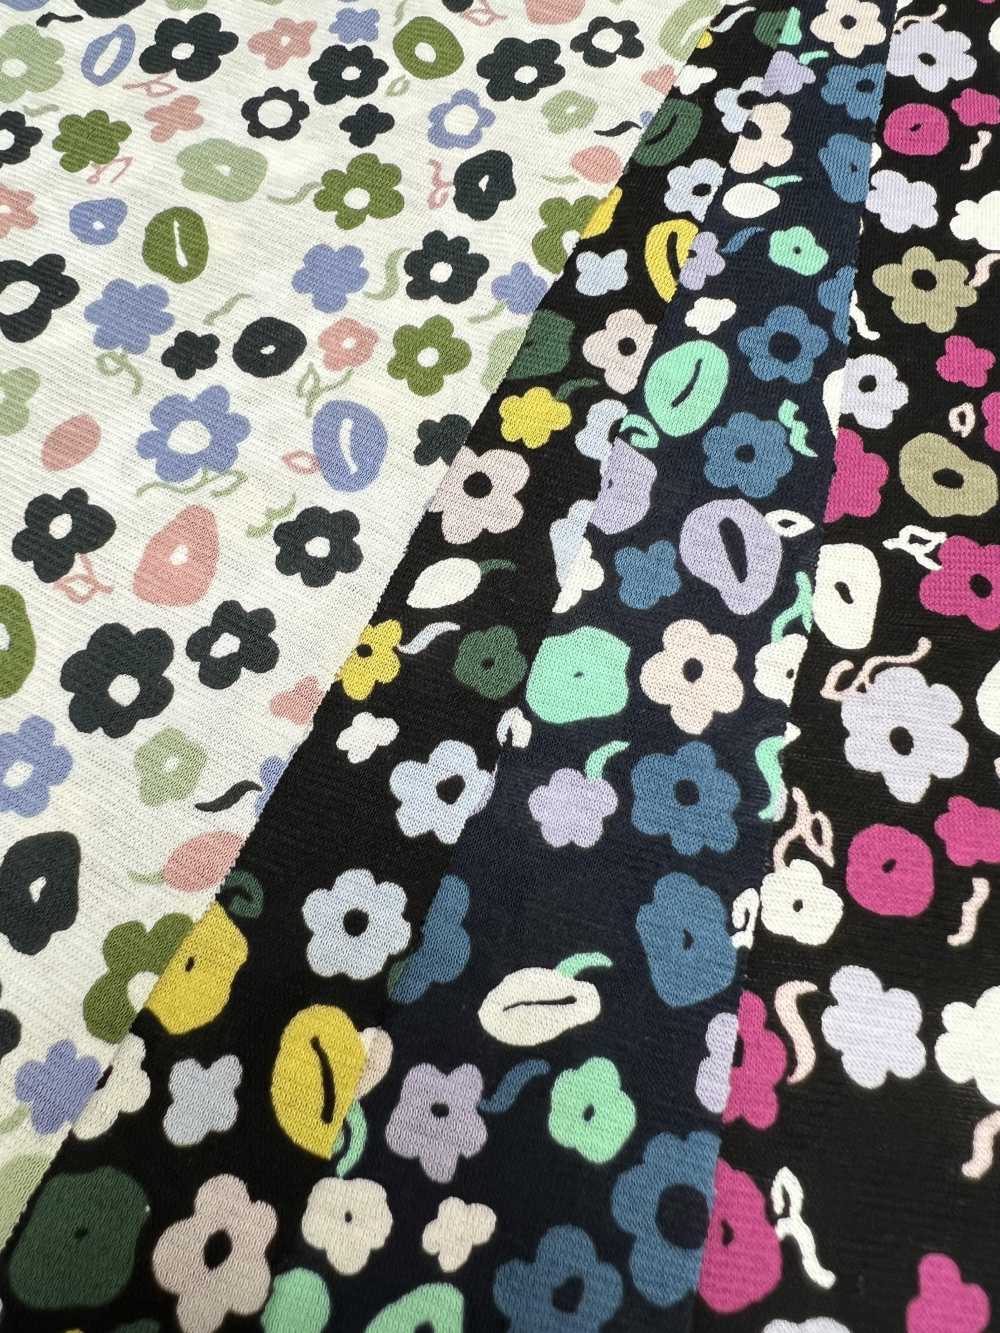 55052-3 60/2 Gas-fired Mercerized Cotton Jersey Floret Overall Pattern[Textile / Fabric] SAKURA COMPANY